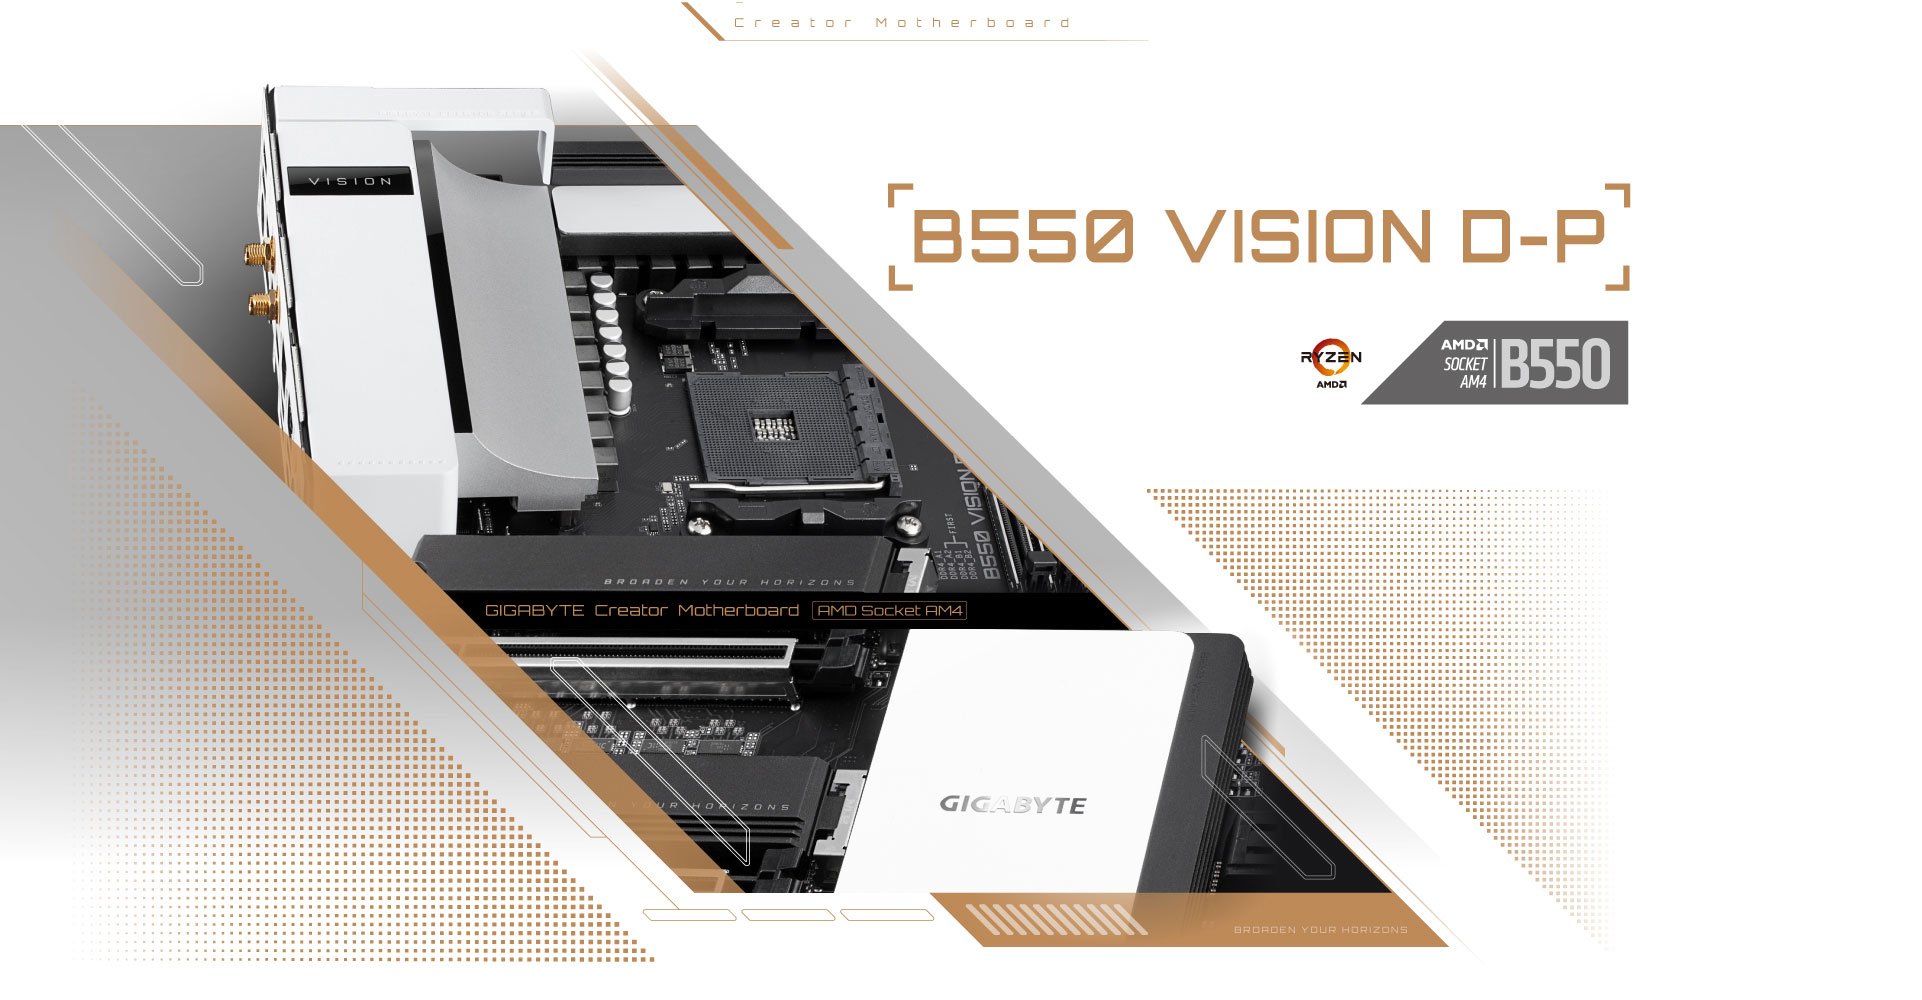 gigabyte-b550-vision-d-p-motherboard-specs